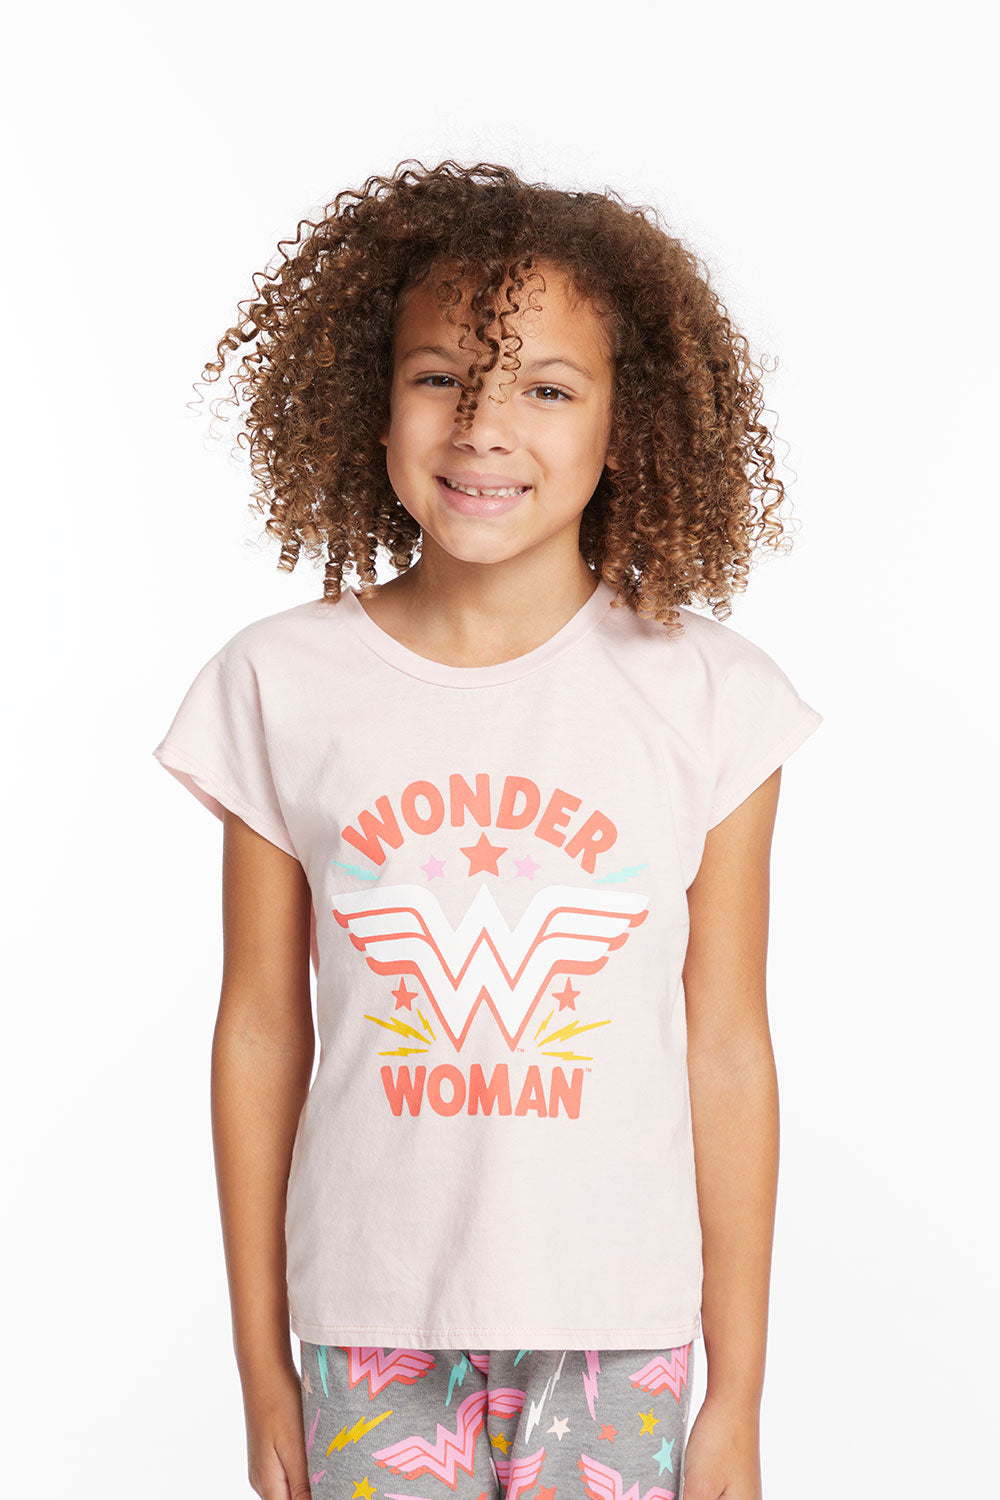 Wonder Woman Retro Logo Girls Tee GIRLS chaserbrand